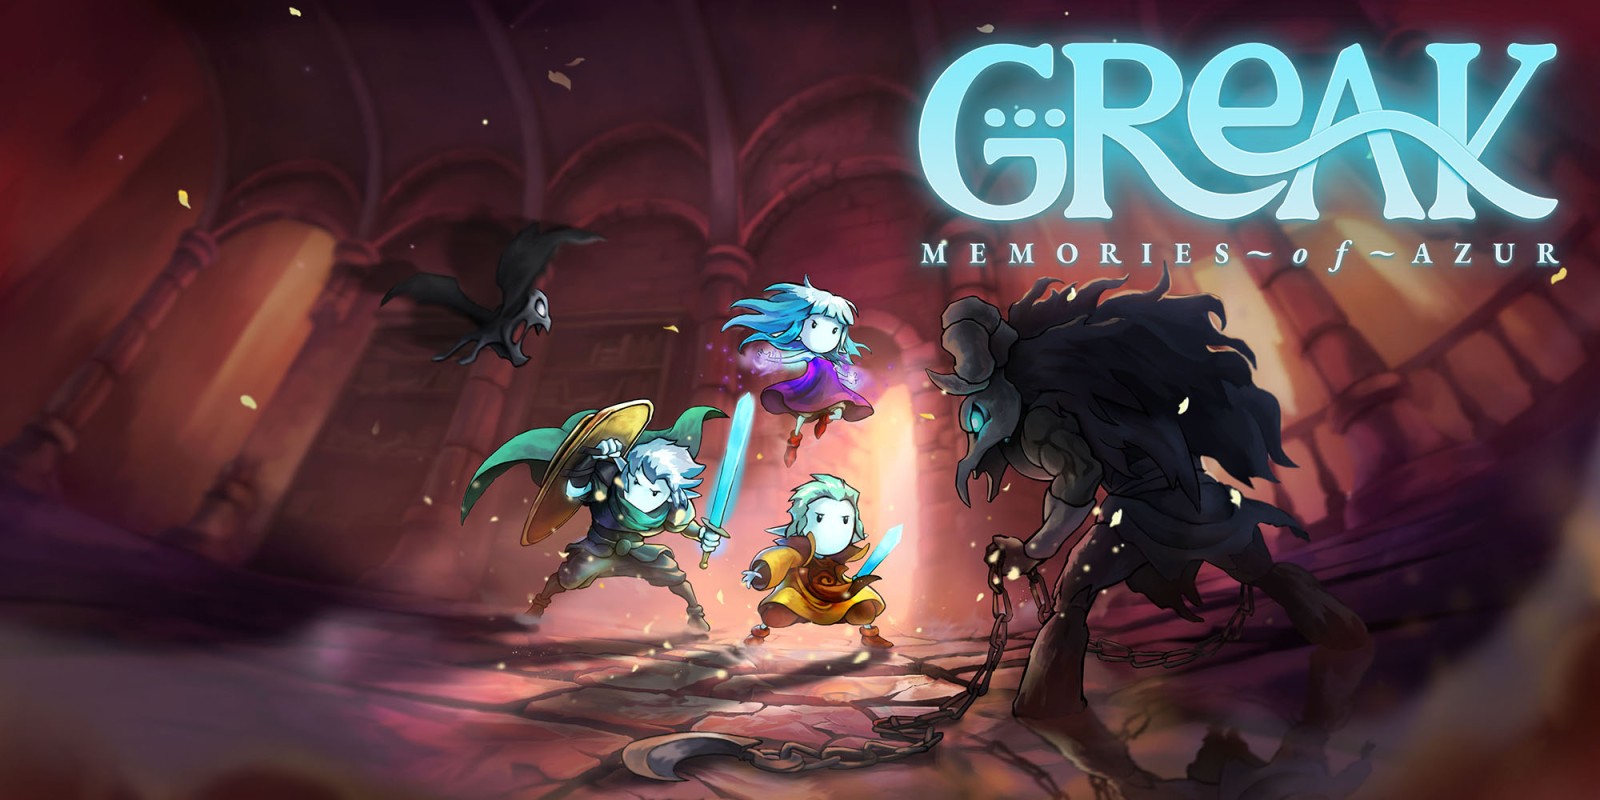 instal the last version for mac Greak: Memories of Azur